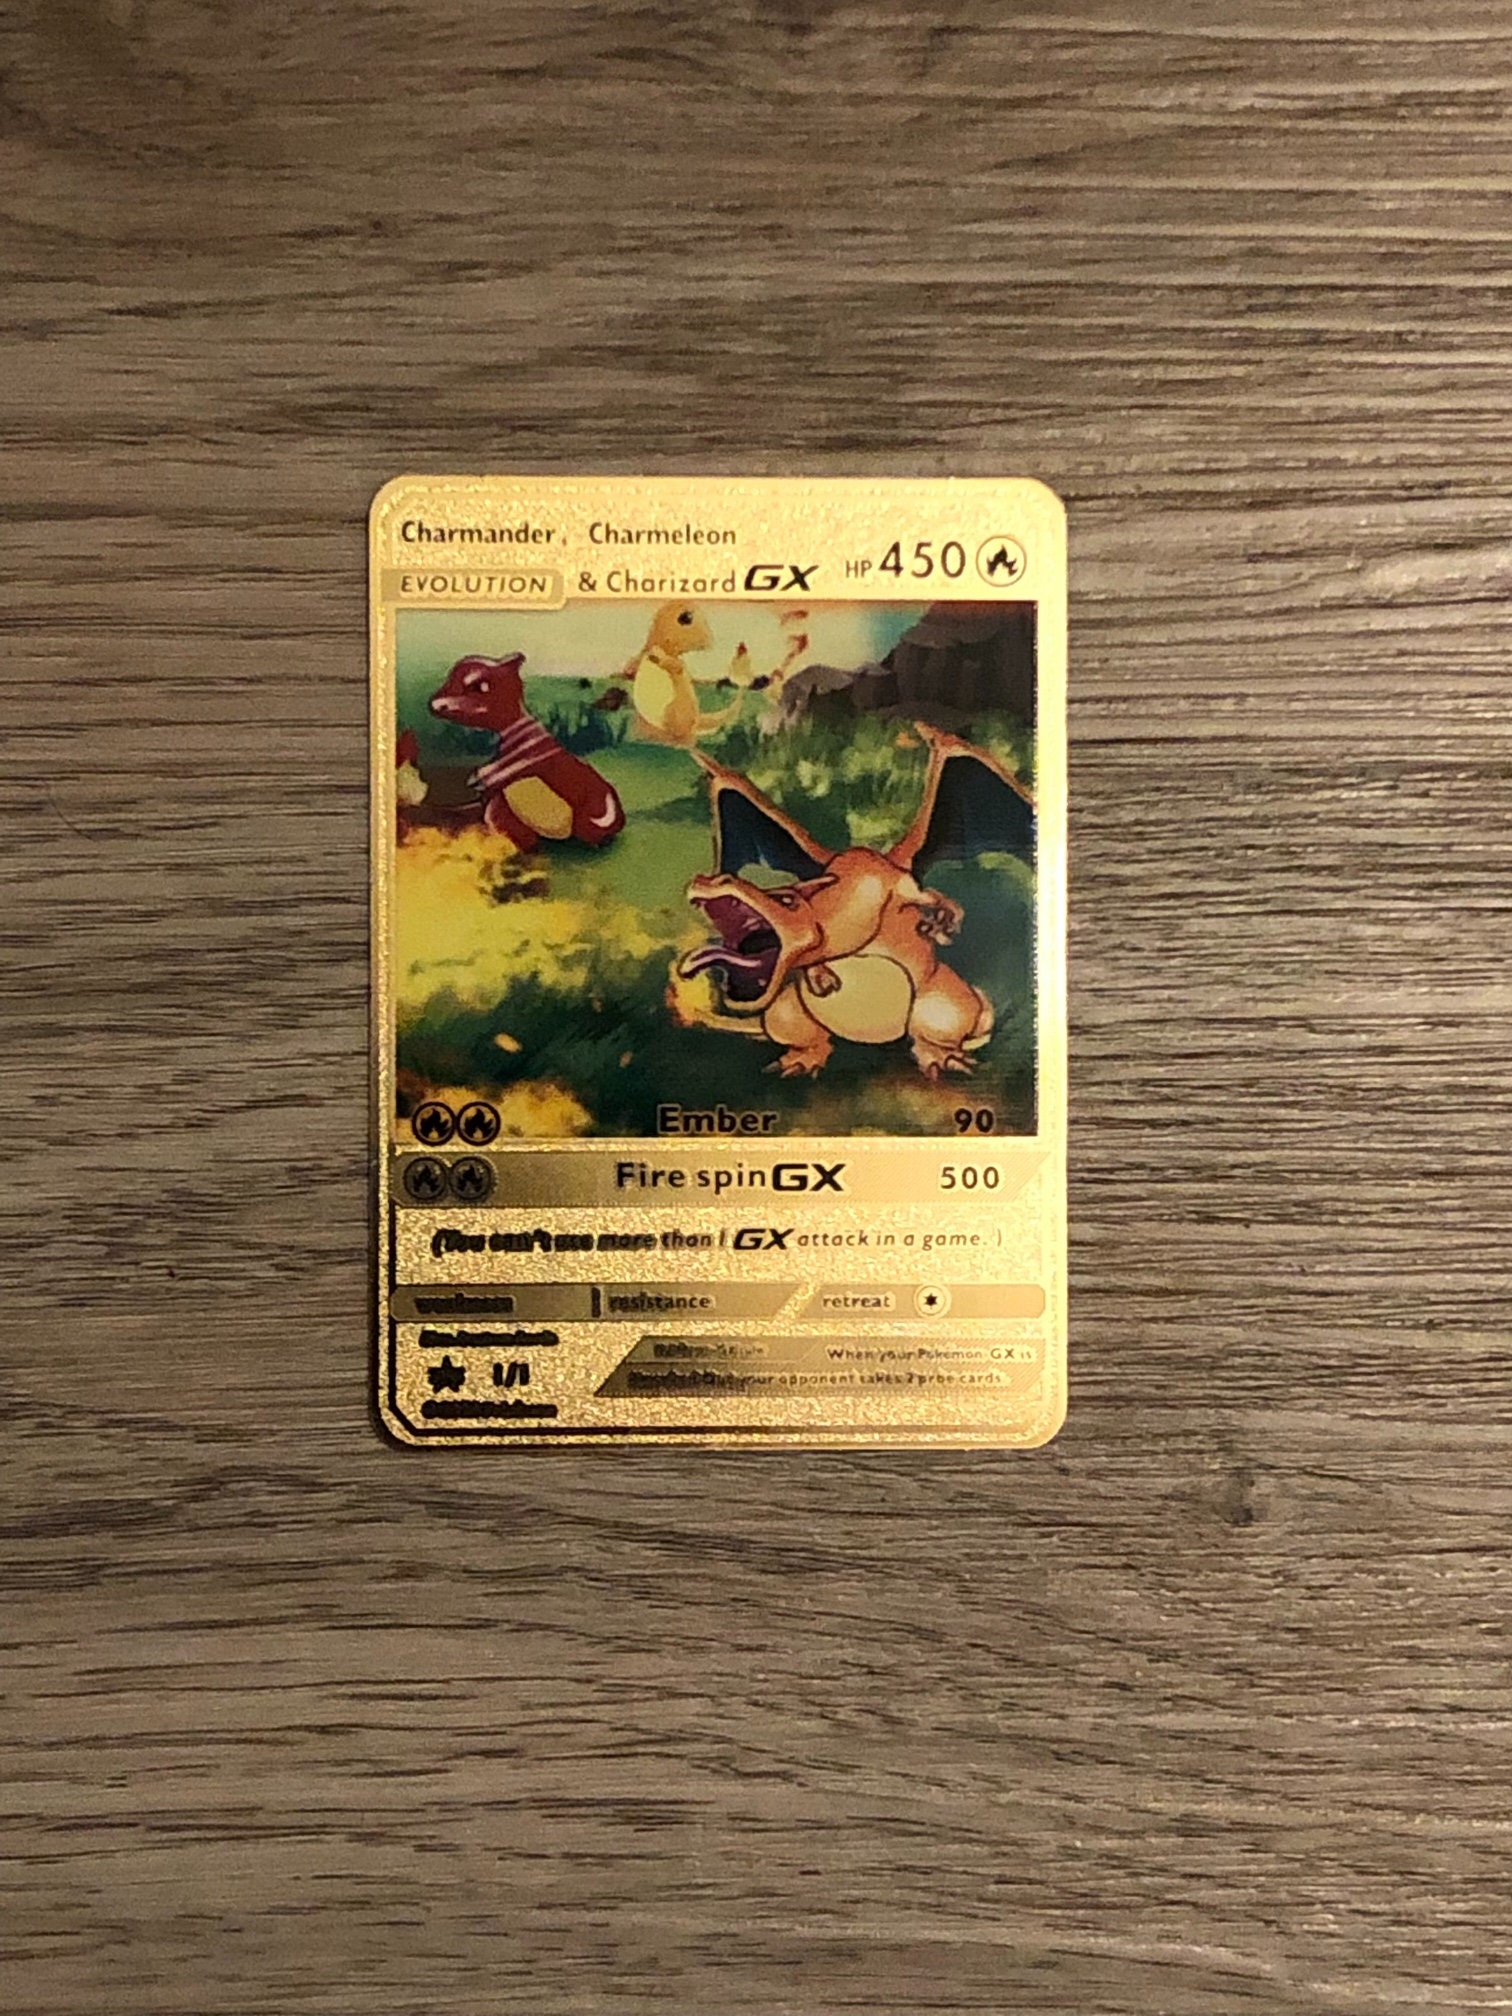 Shadow Charizard Blastoise Venusaur GX Metal Pokemon Cards -  Portugal